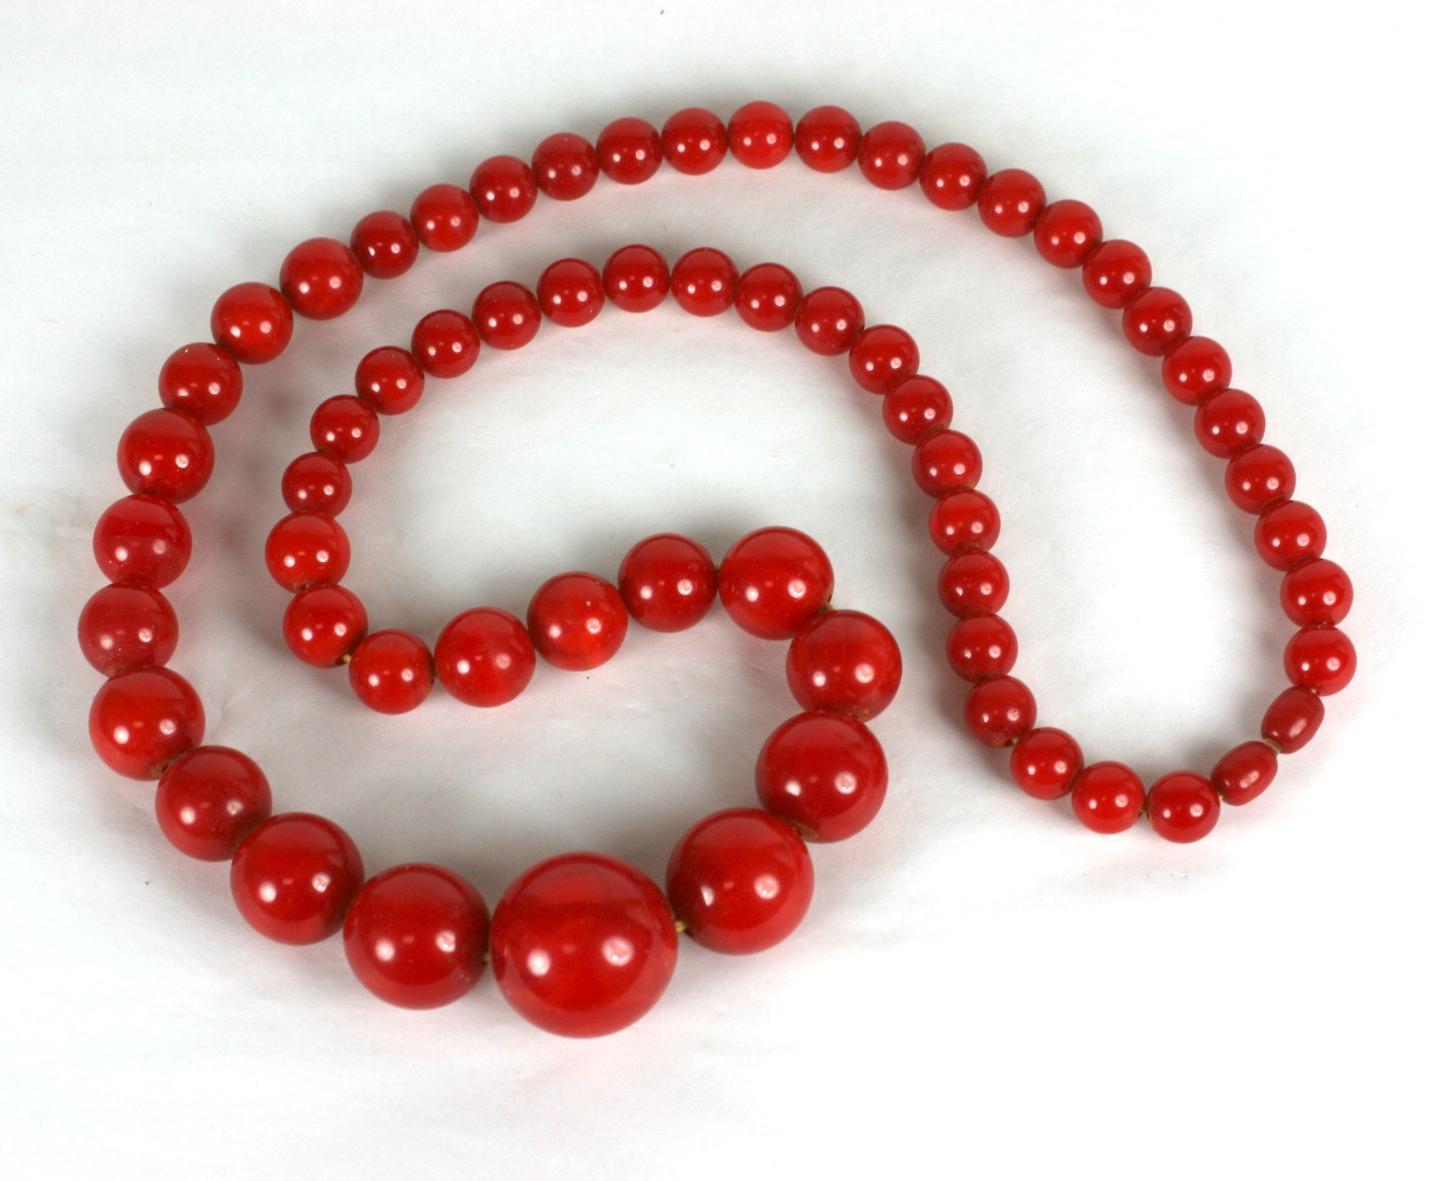 bakelite beads